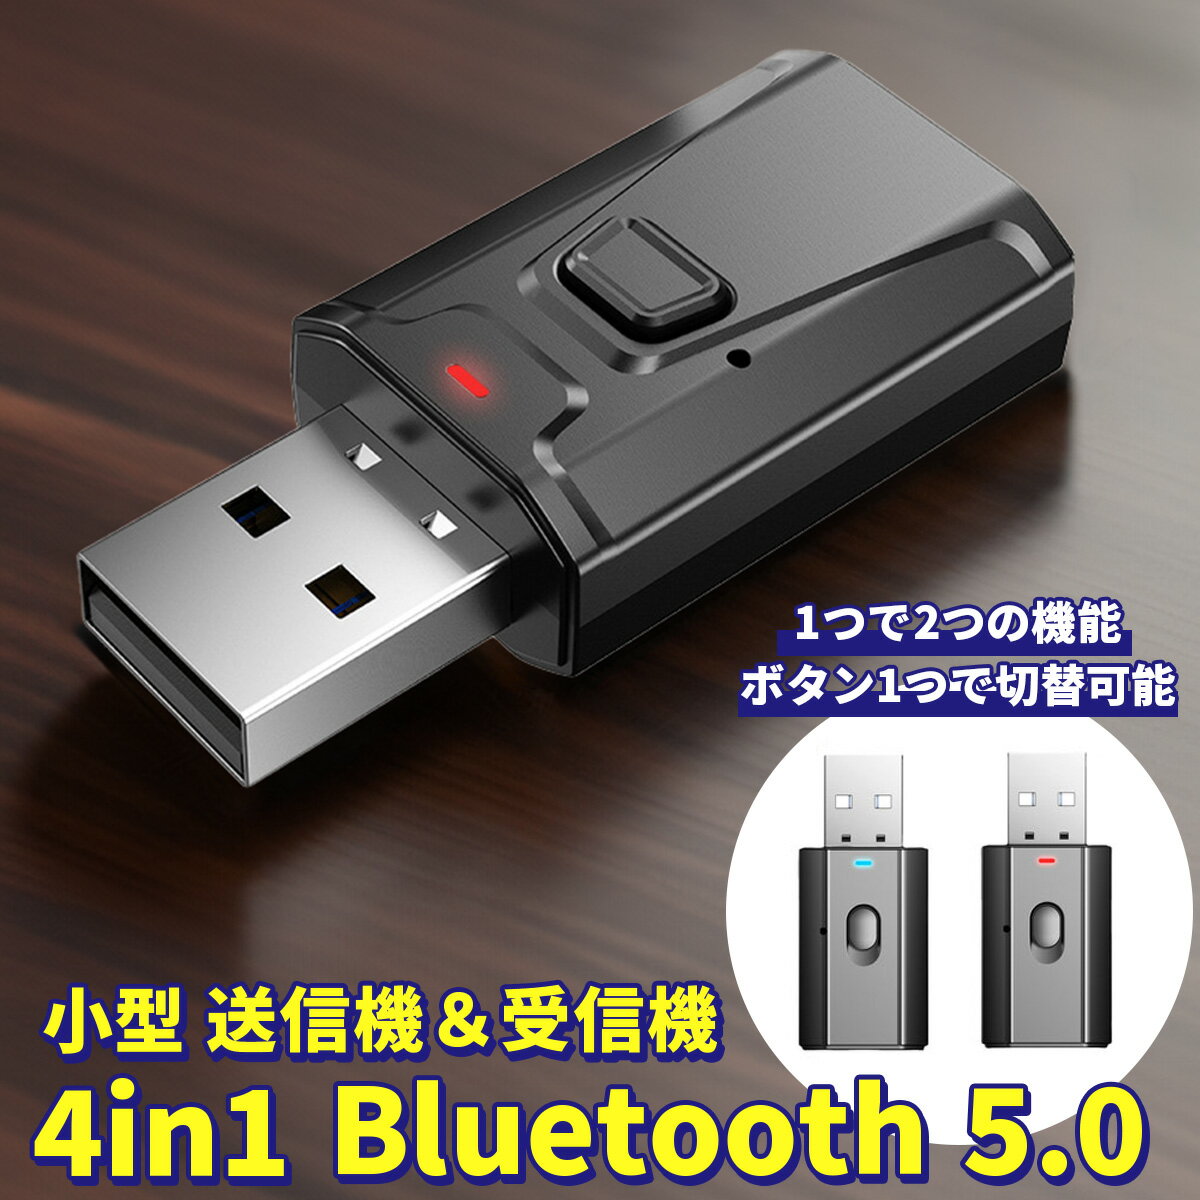 Bluetooth レシーバー 5.0 トランスミッター 送受信機 ブルートゥース 送信機 受信機 小型 アダプター Bluetooth5.0 …